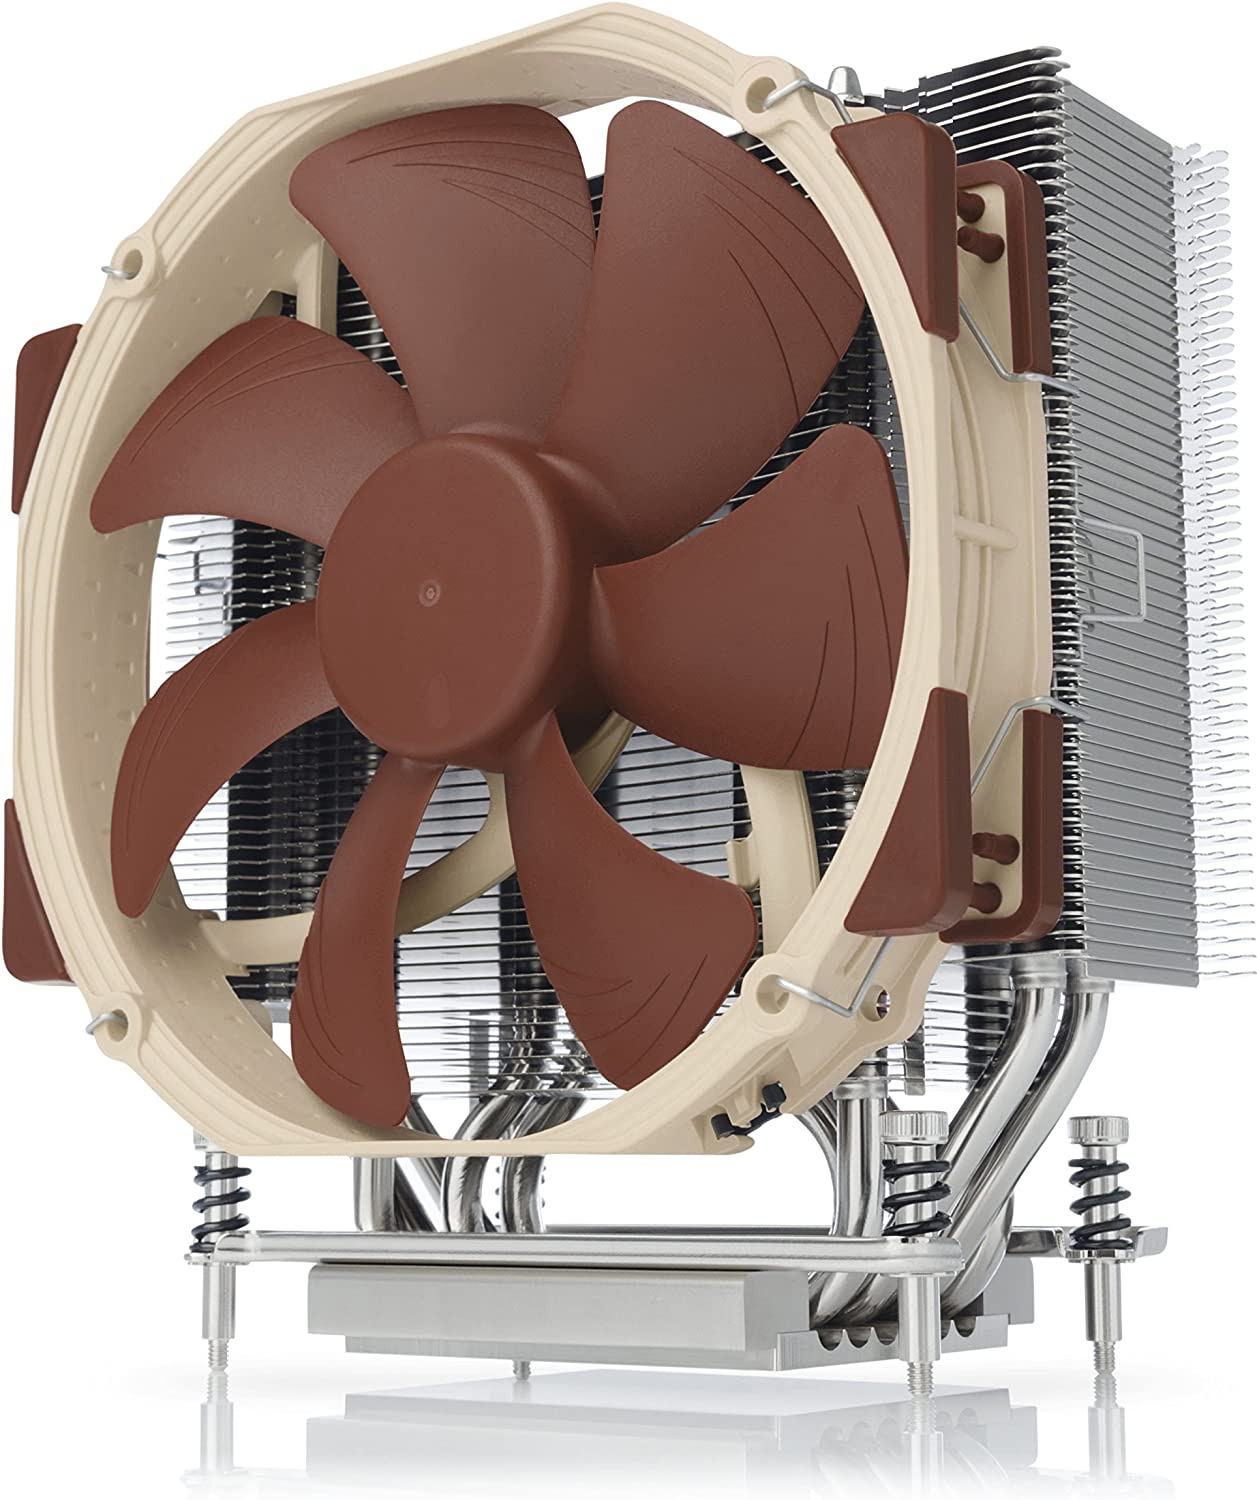 NH-U14S TR4-SP3, Premium-Grade CPU Cooler for AMD Strx4/Tr4/Sp3 (140Mm, Brown)